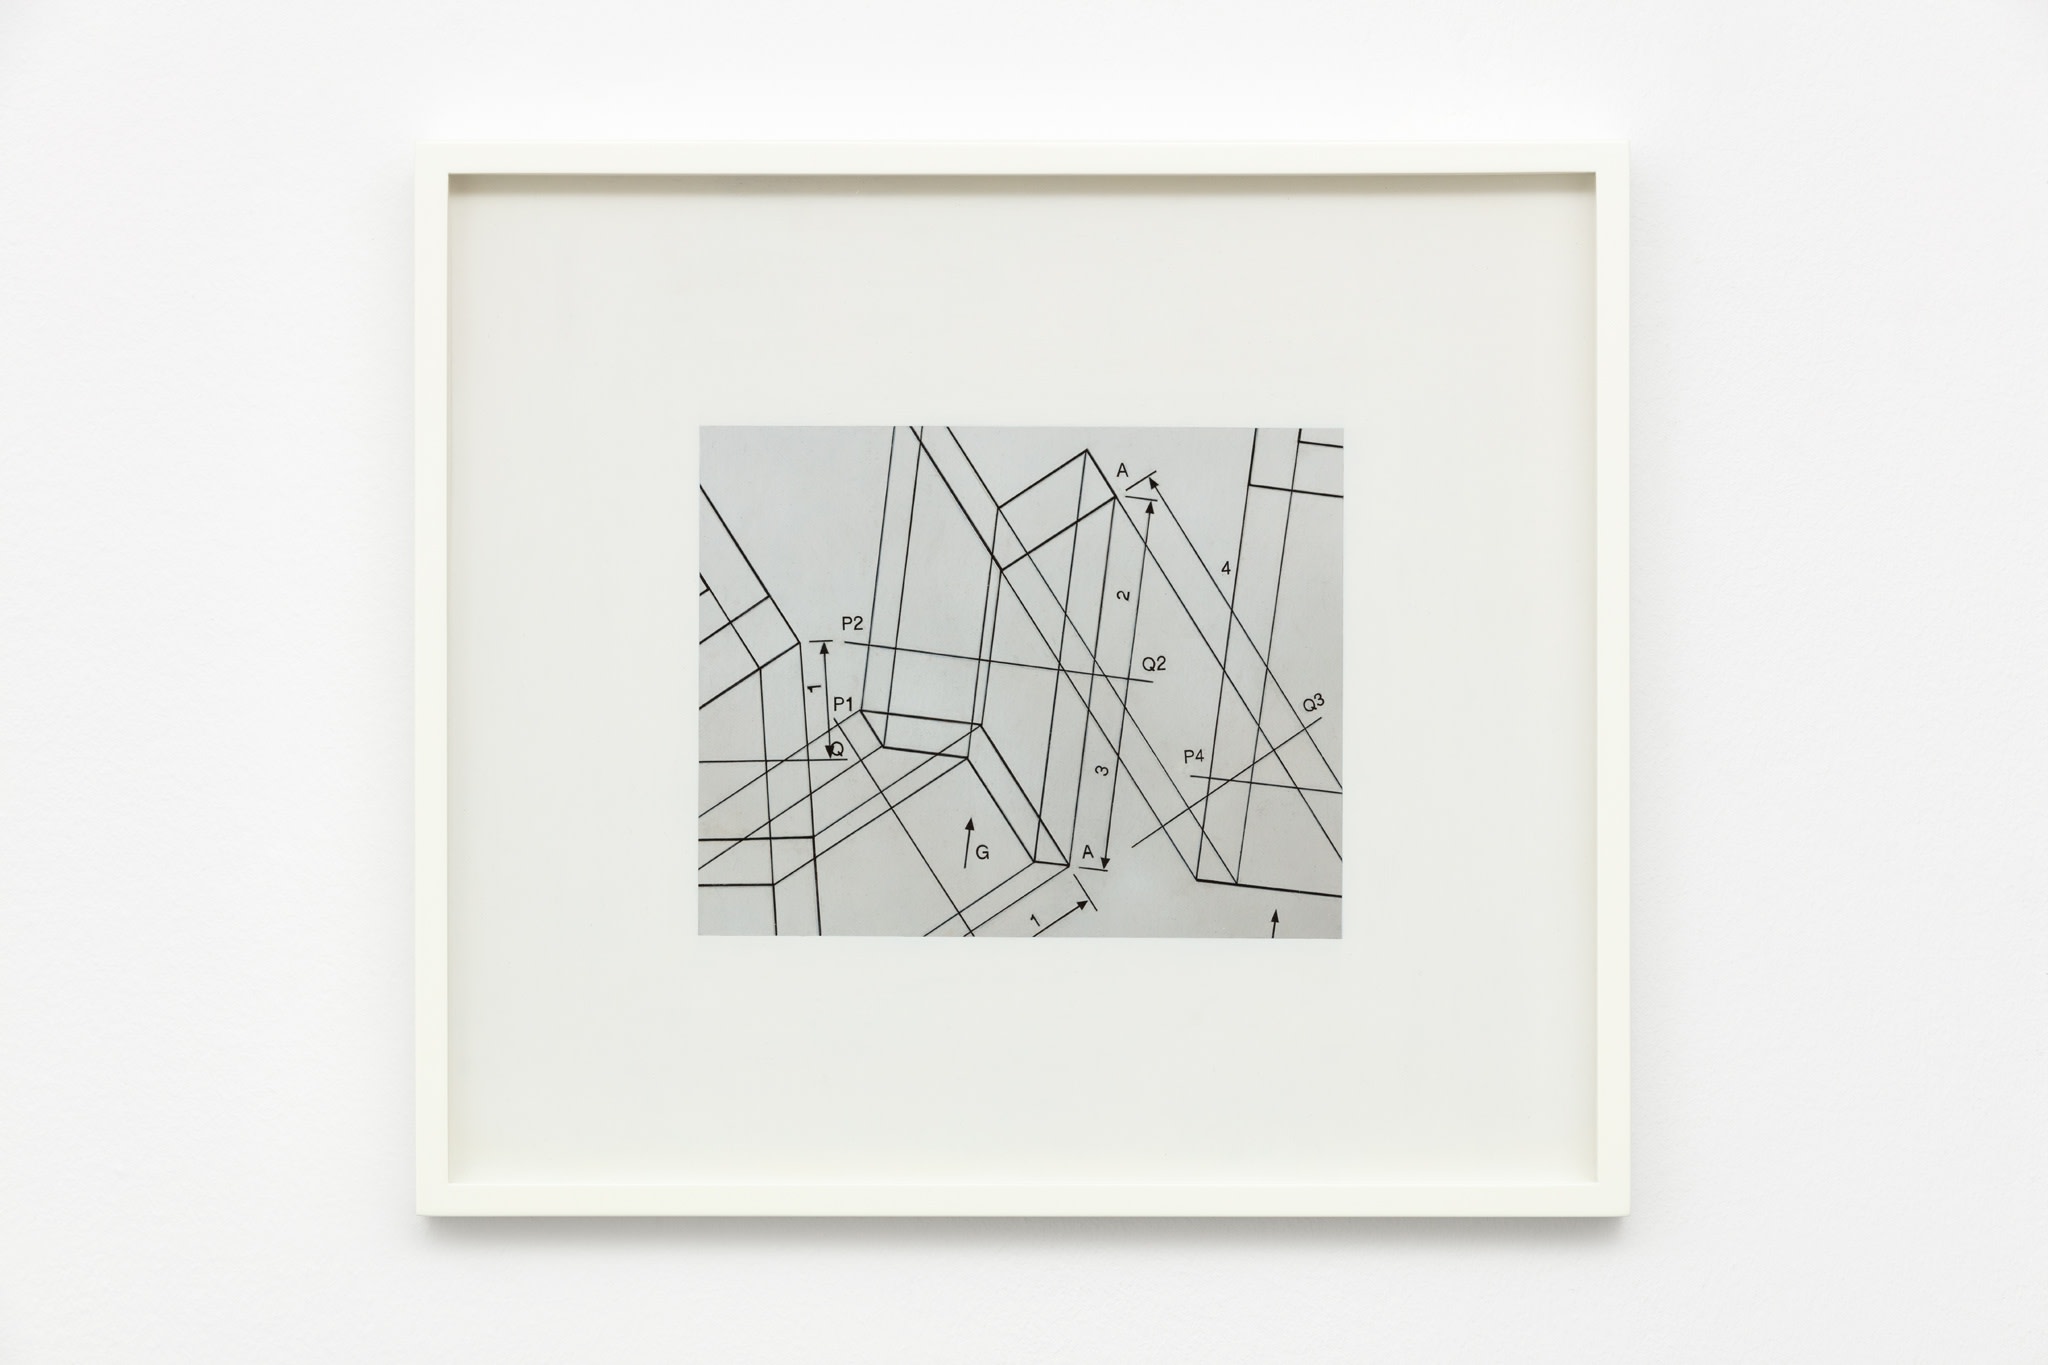 Andrew Grassie, Diagram, 2019, tempera on paper on board, 14,8 x 18,8 cm (5 1/2 x 7 1/8 in) (image), 31,1 x 35,2 x 3 cm (12 1/4 x 13 3/4 x 1 1/8 in) (framed). Photo © Andrea Rossetti